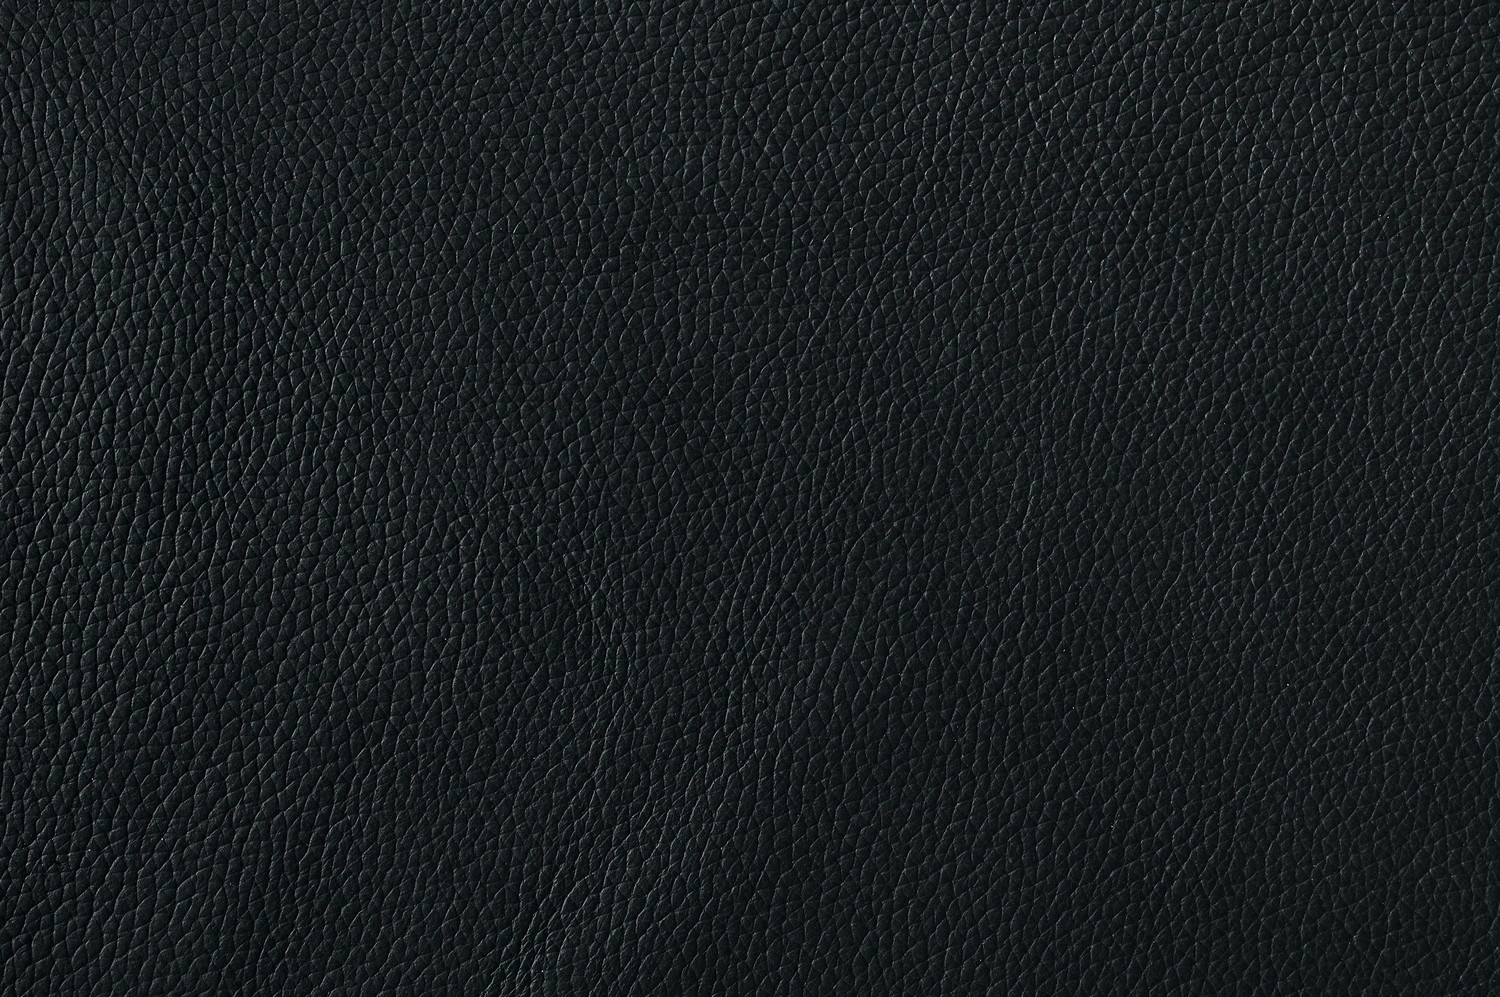 Homelegance Pendu Double Reclining Sofa - Top Grain Leather Match - Black